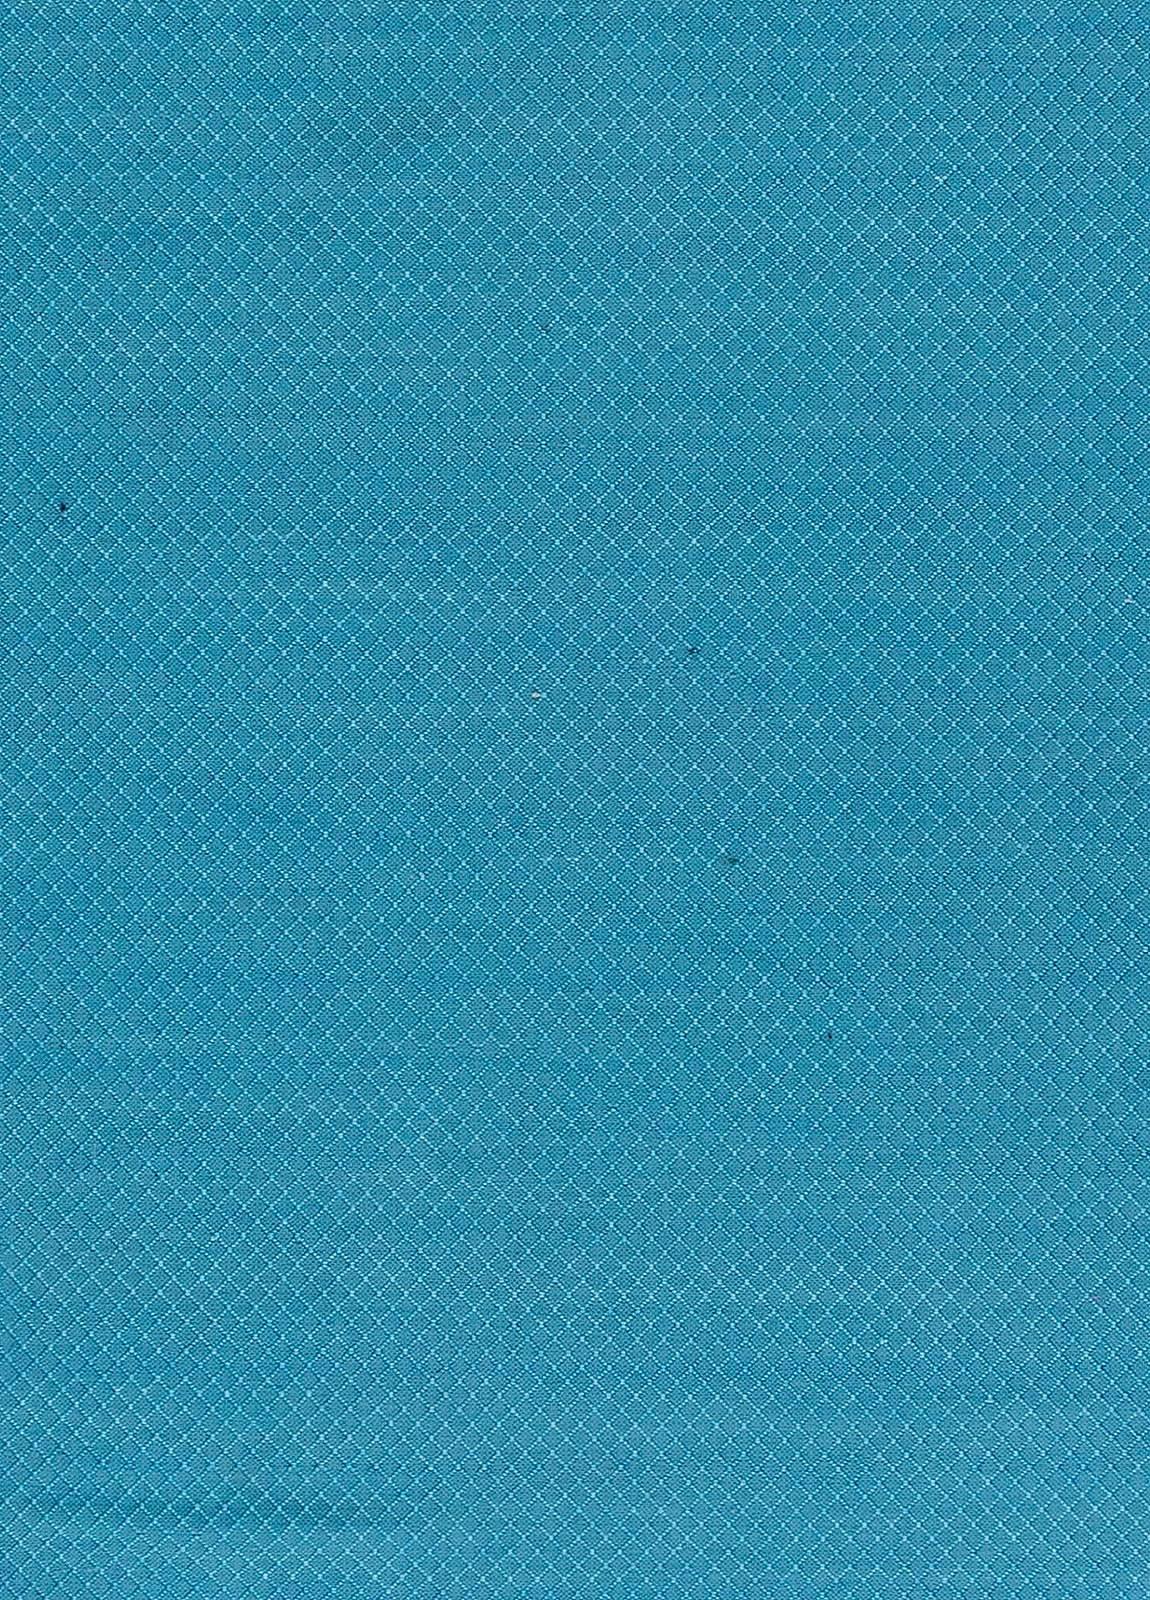 High-Quality Contemporary Blue Flat-Weave Rug by Doris Leslie Blau
Size: 14'0